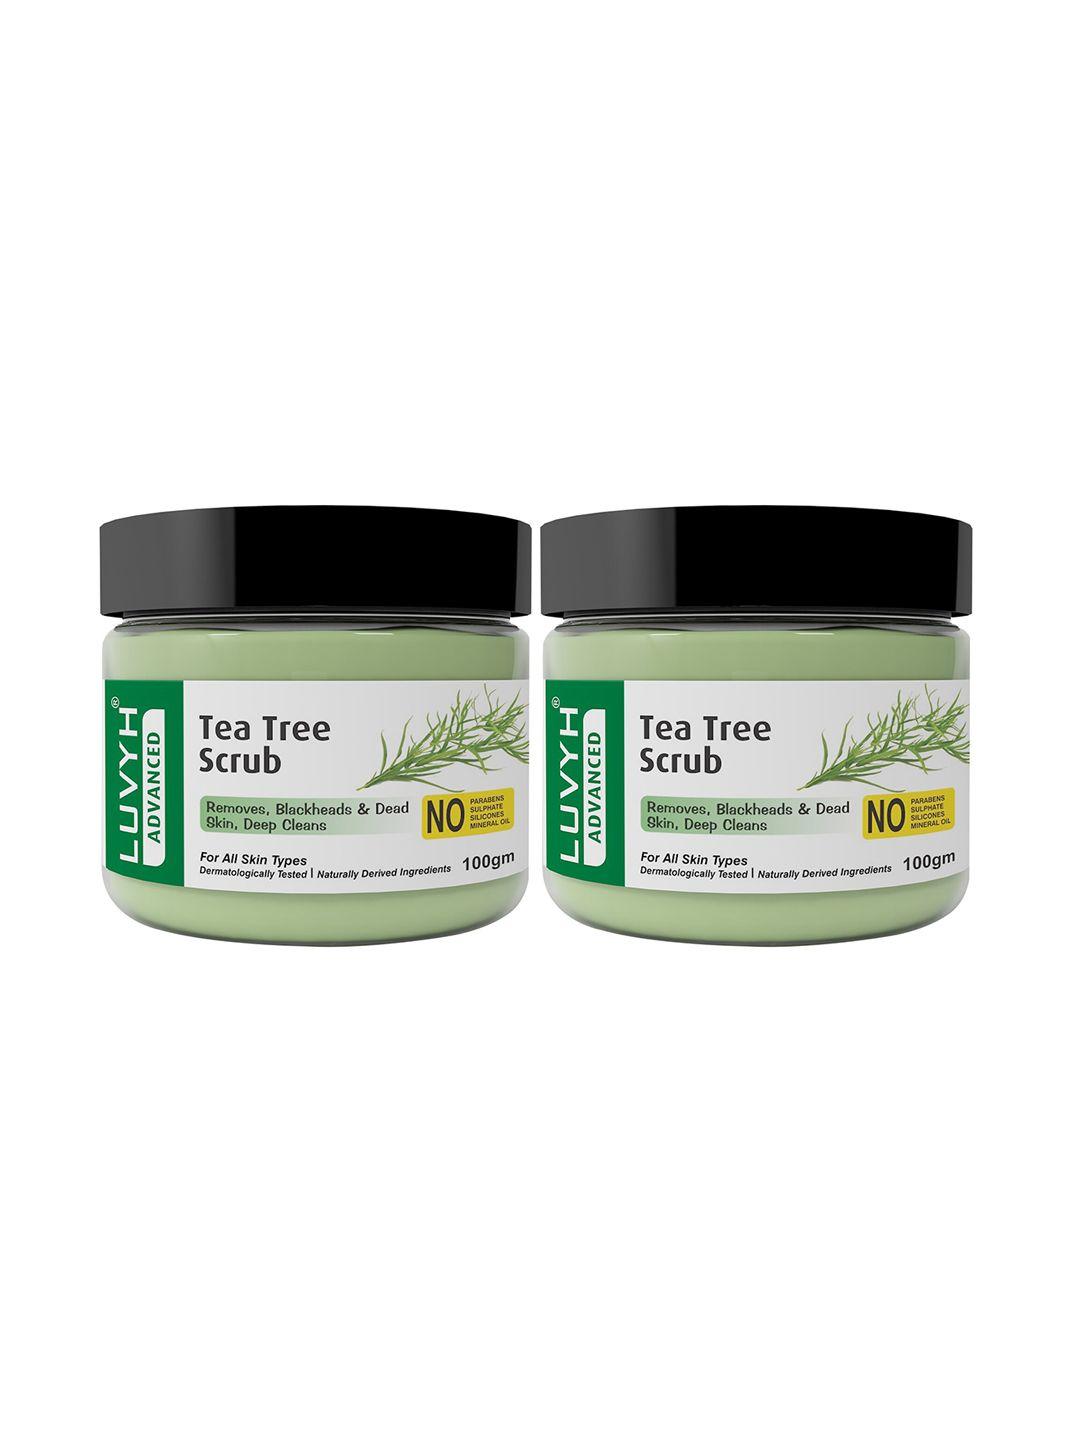 luvyh advanced set of 2 tea tree scrub for all skin types - 100 g each